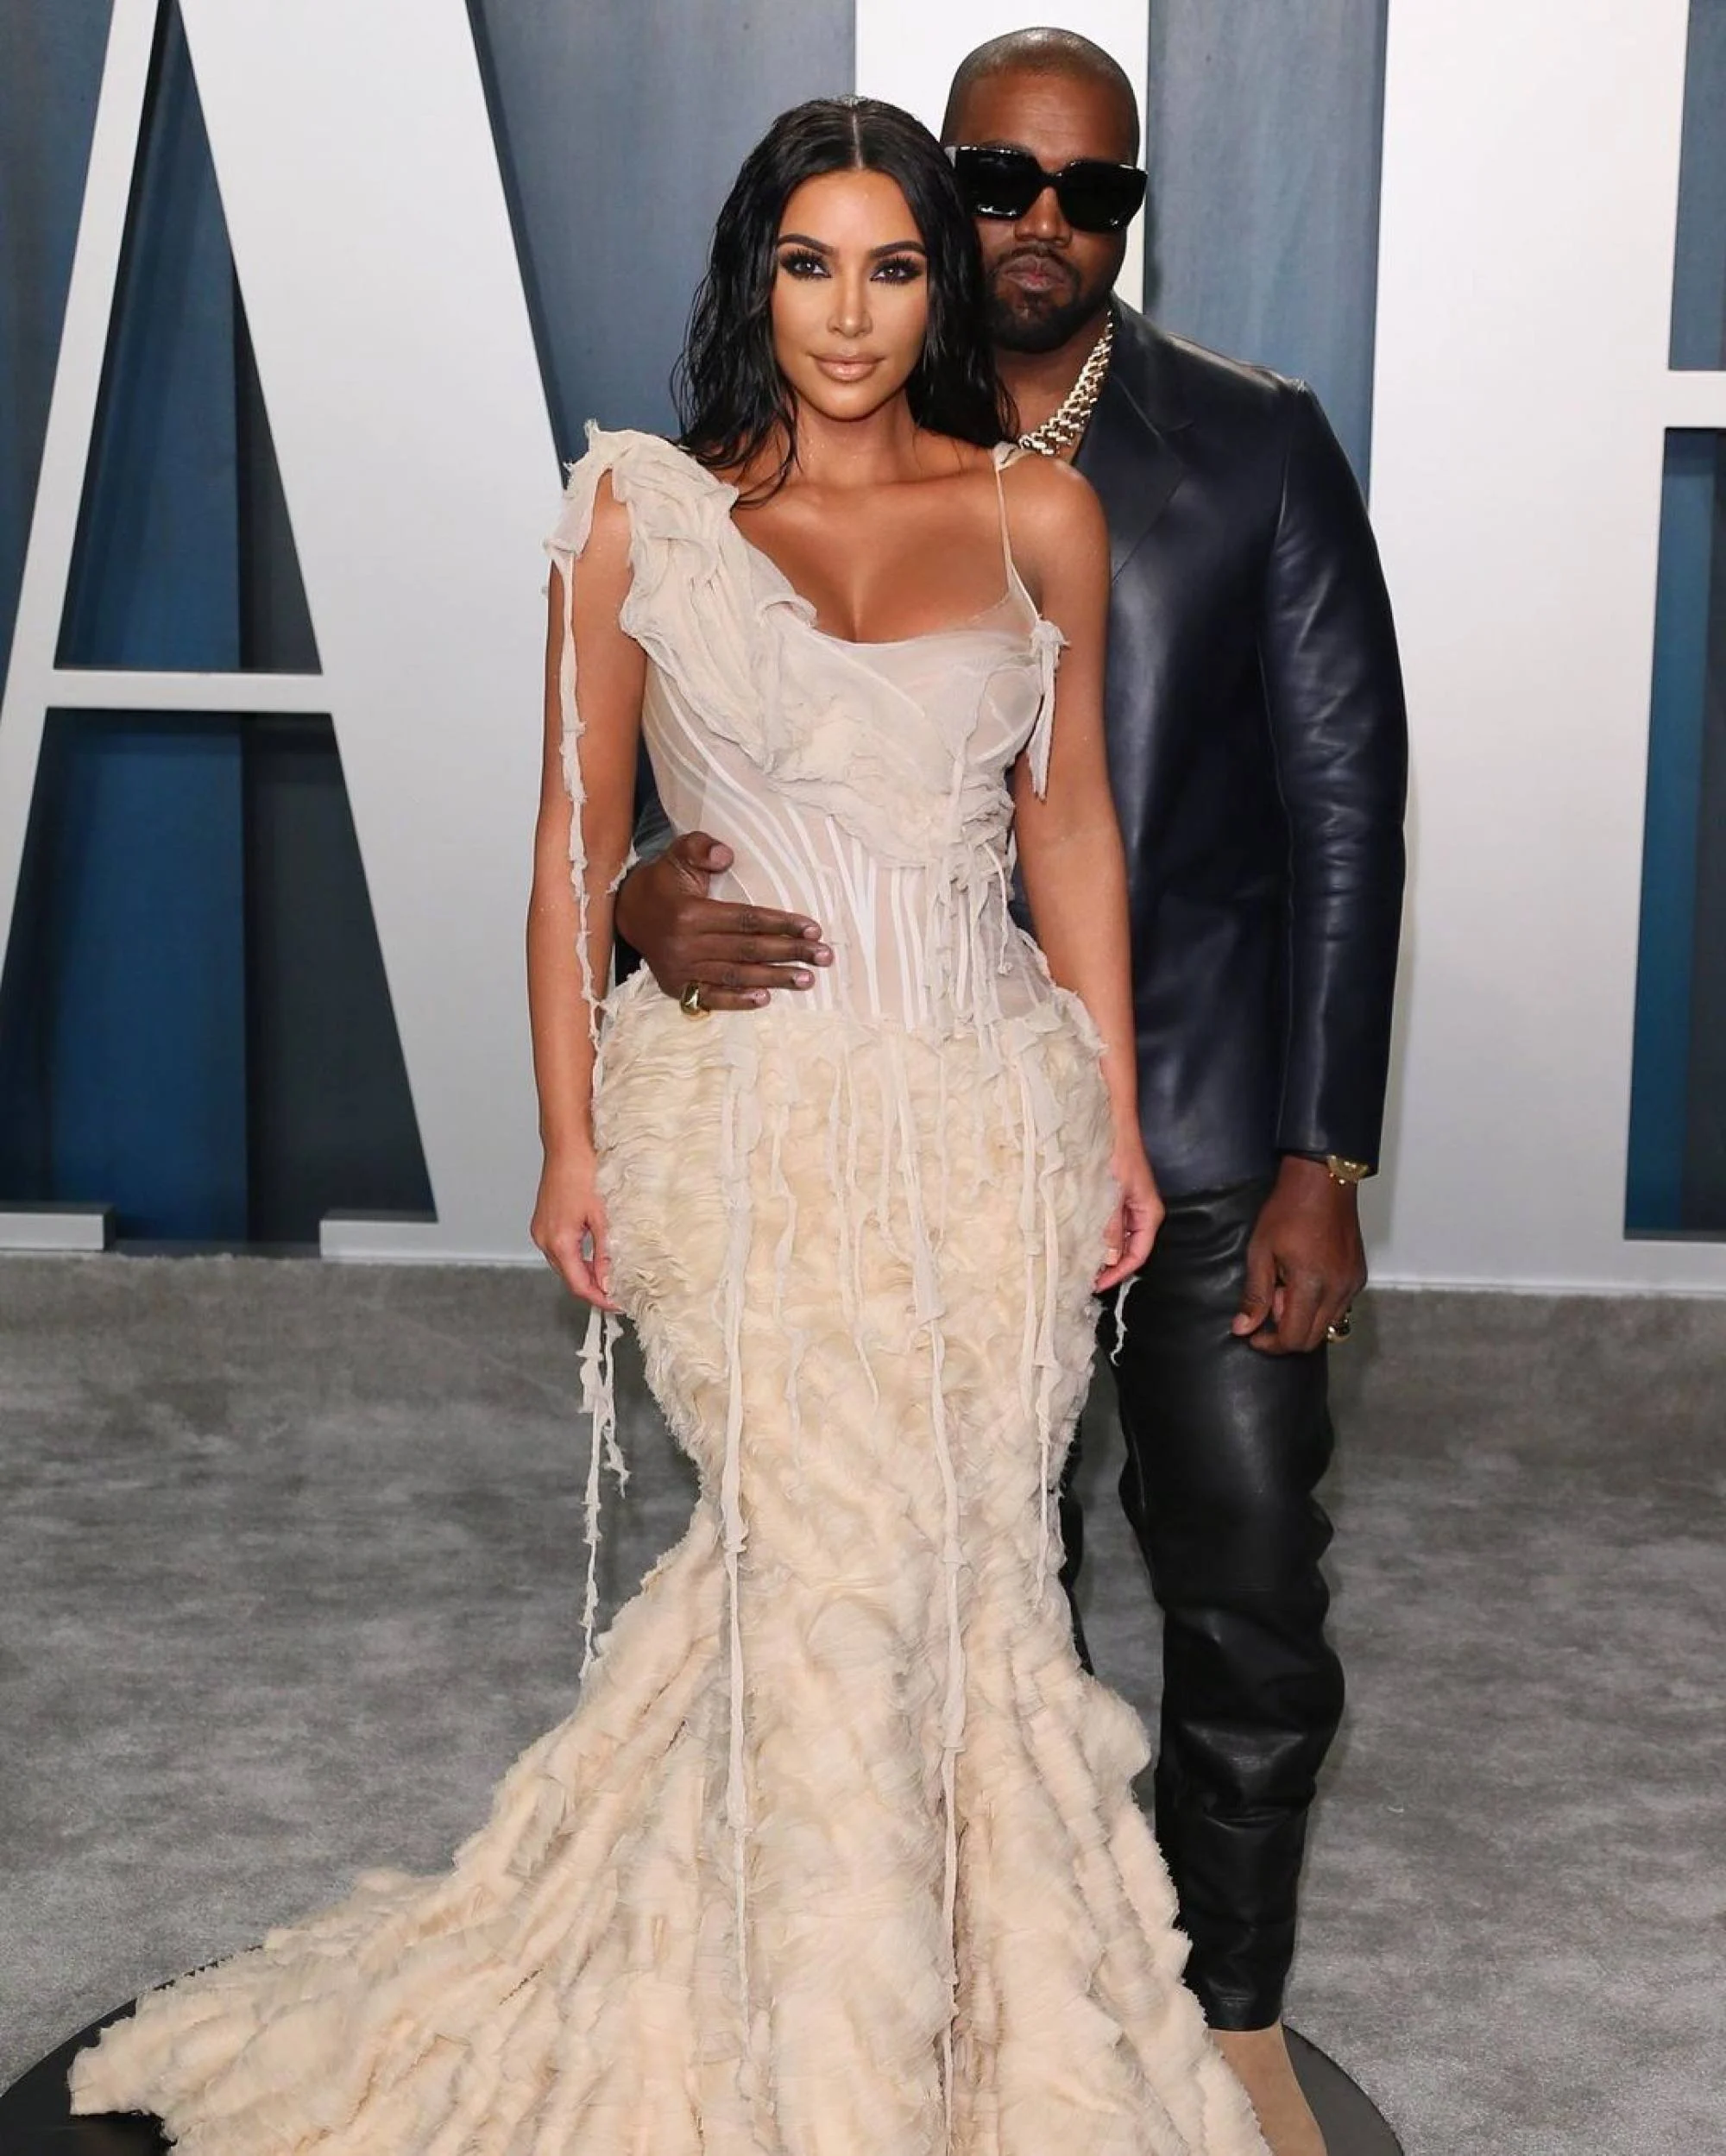 Kim Kardashian and Kanye West at the 2021 Vanity Fair party. Photo: @kimkardashian/Instagram